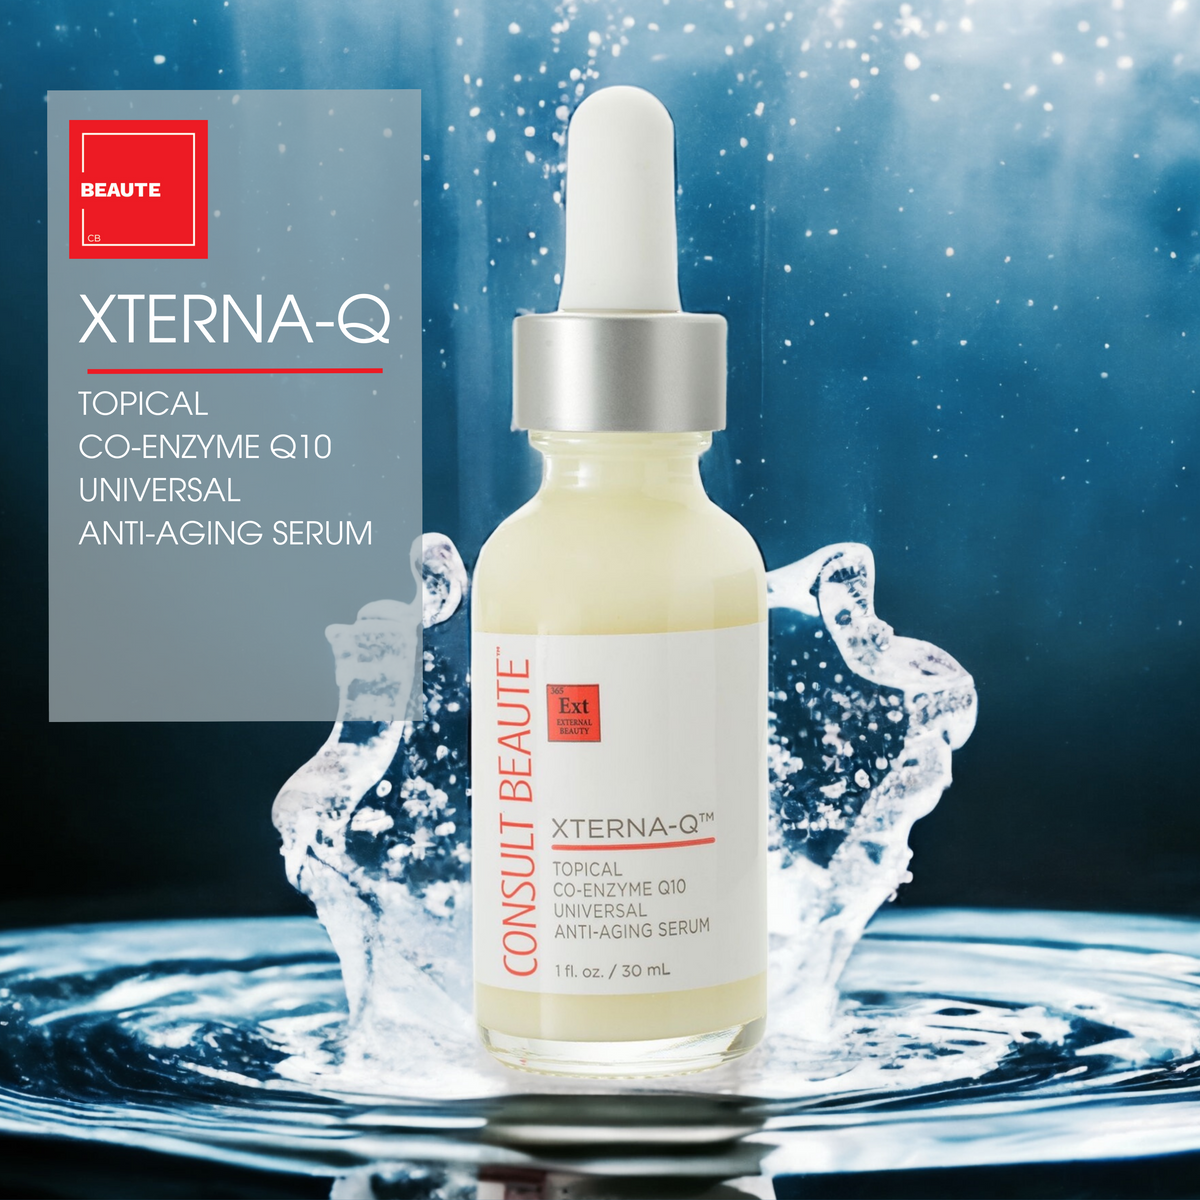 Xterna Q Topical Co-Enzyme Q10 Universal Anti-Aging Serum